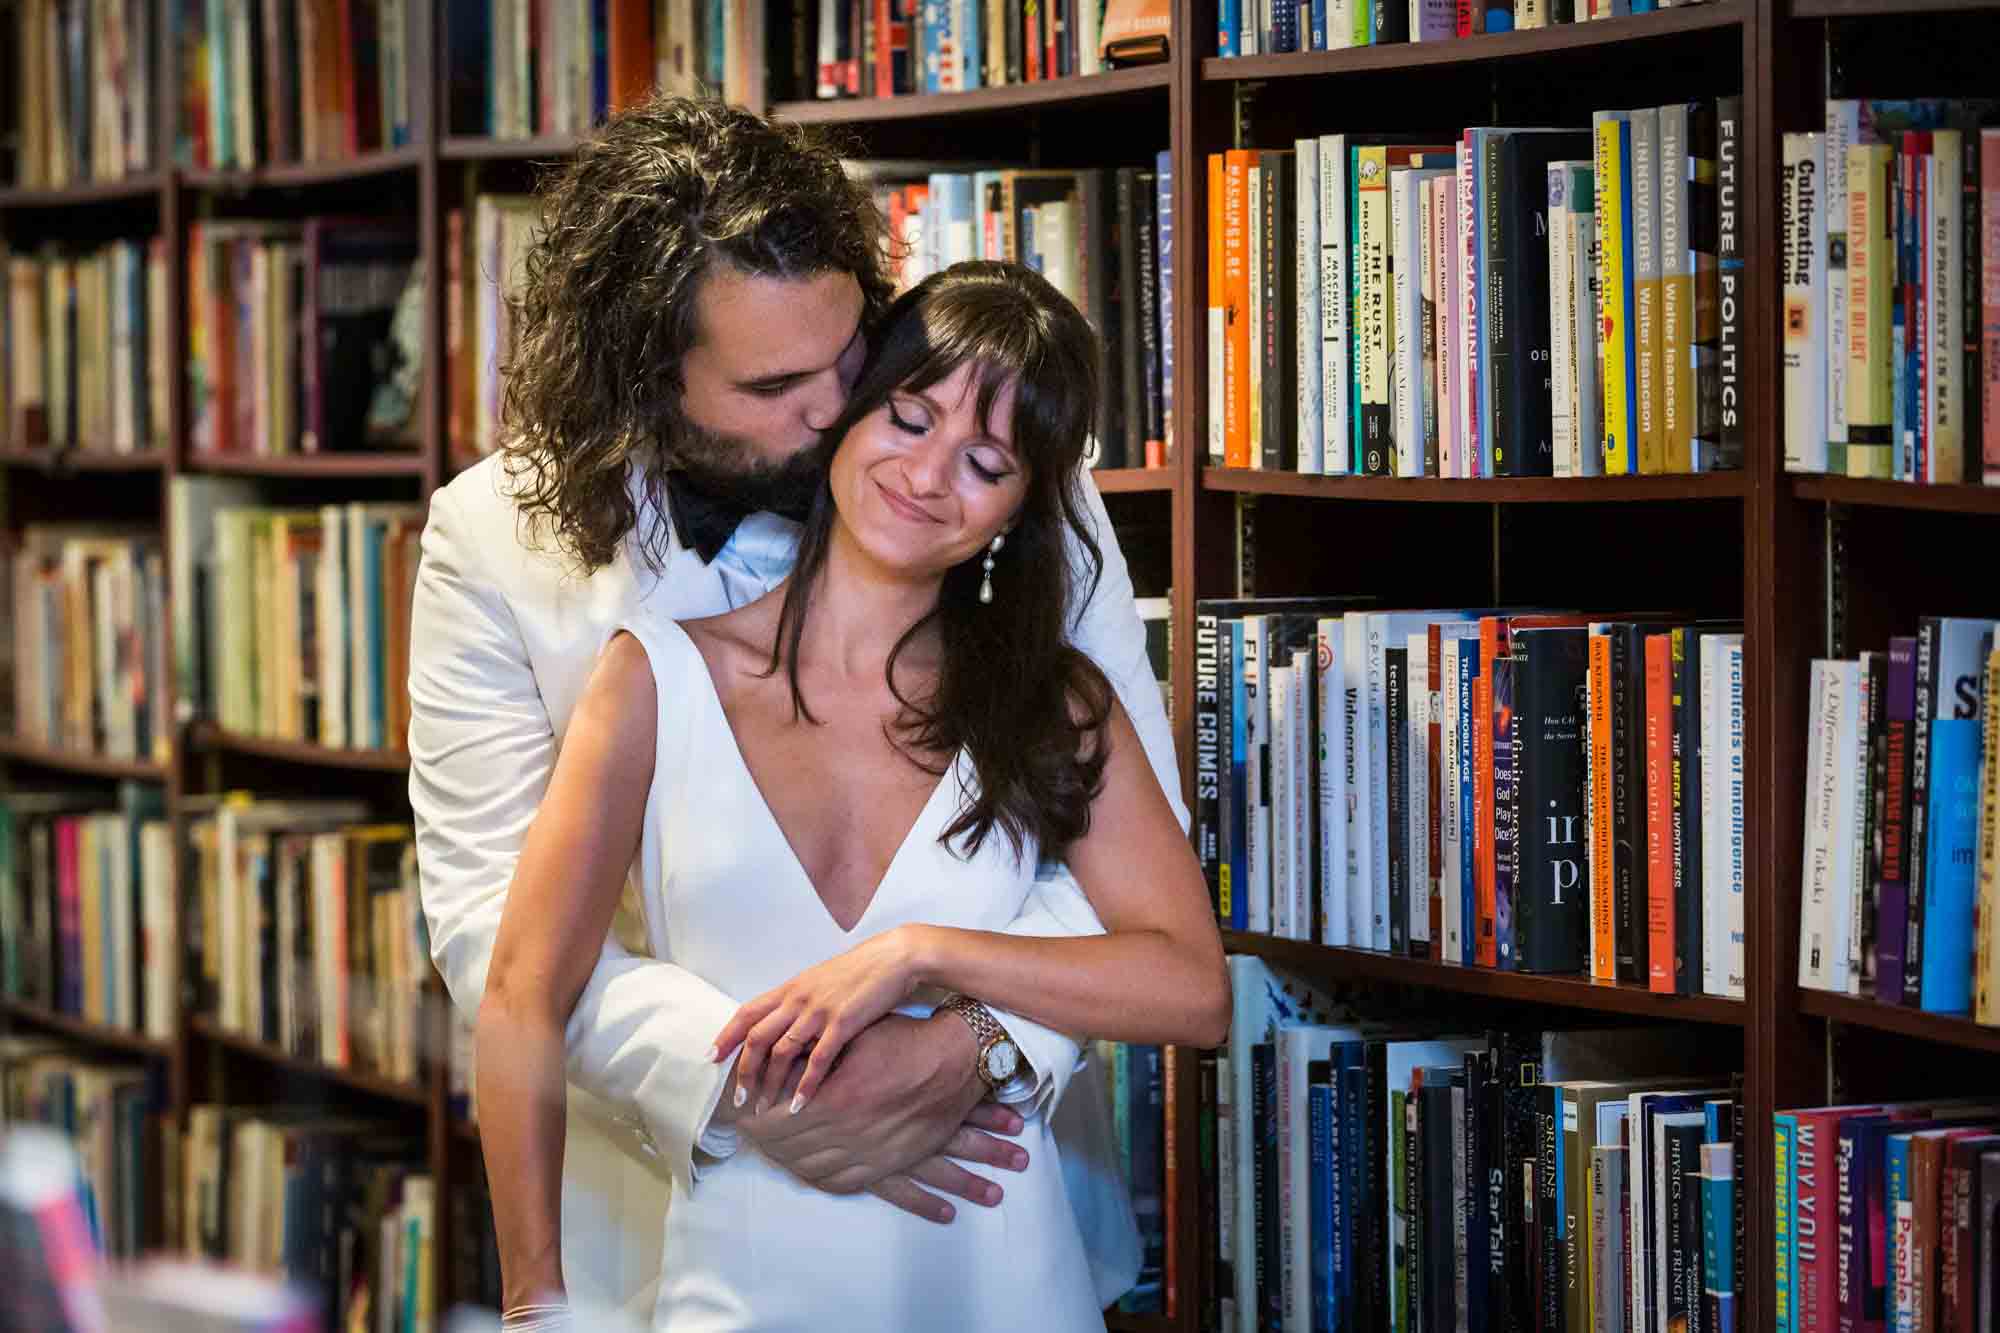 Groom hugging bride from behind in front of bookshelf